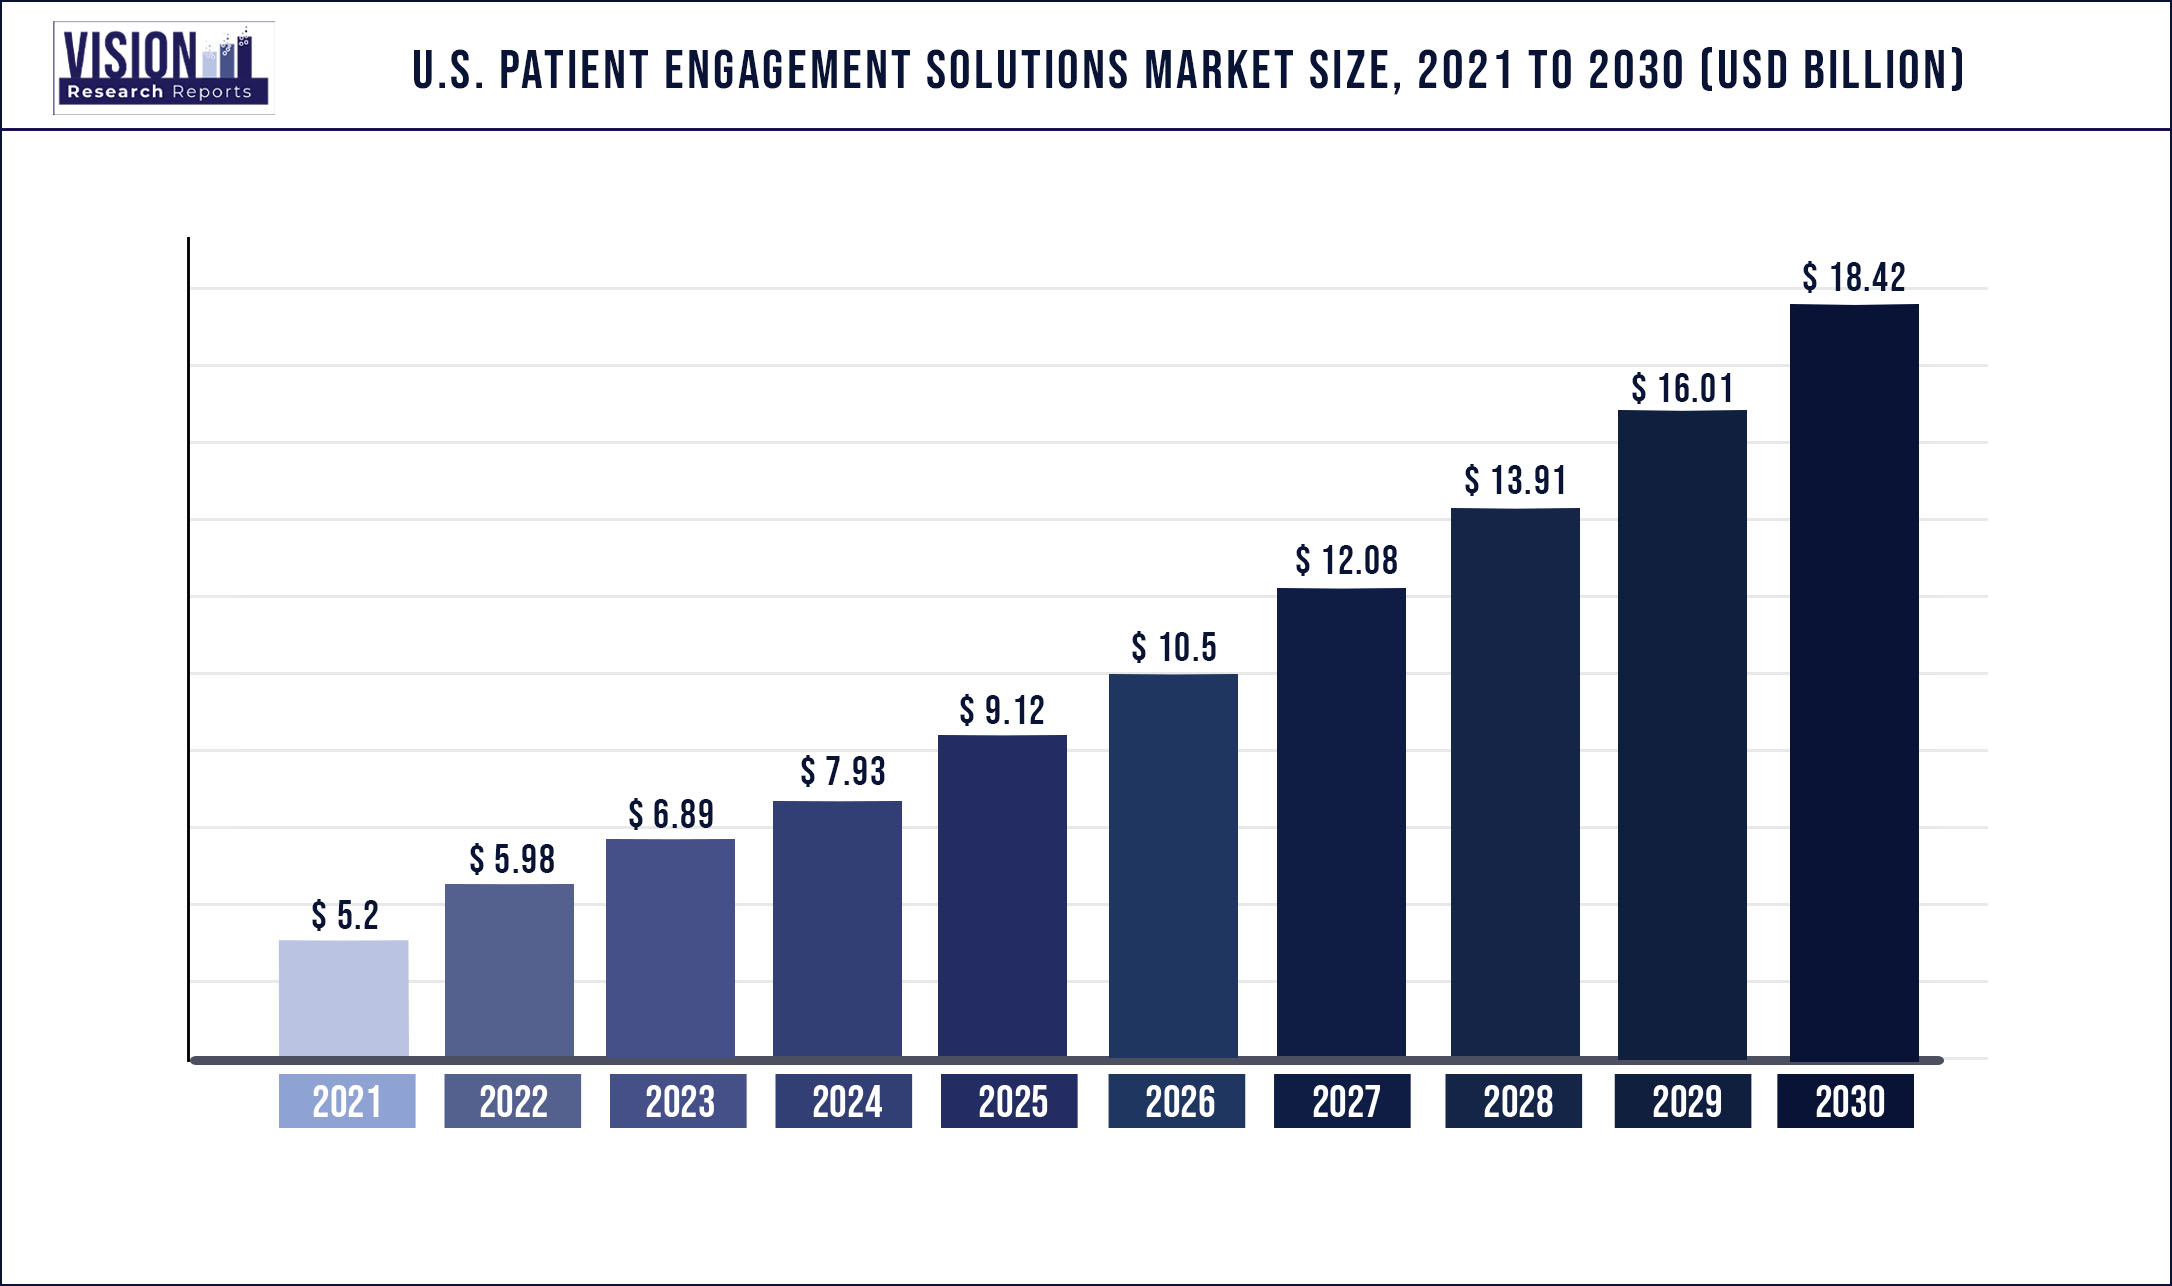 U.S. Patient Engagement Solutions Market Size 2021 to 2030